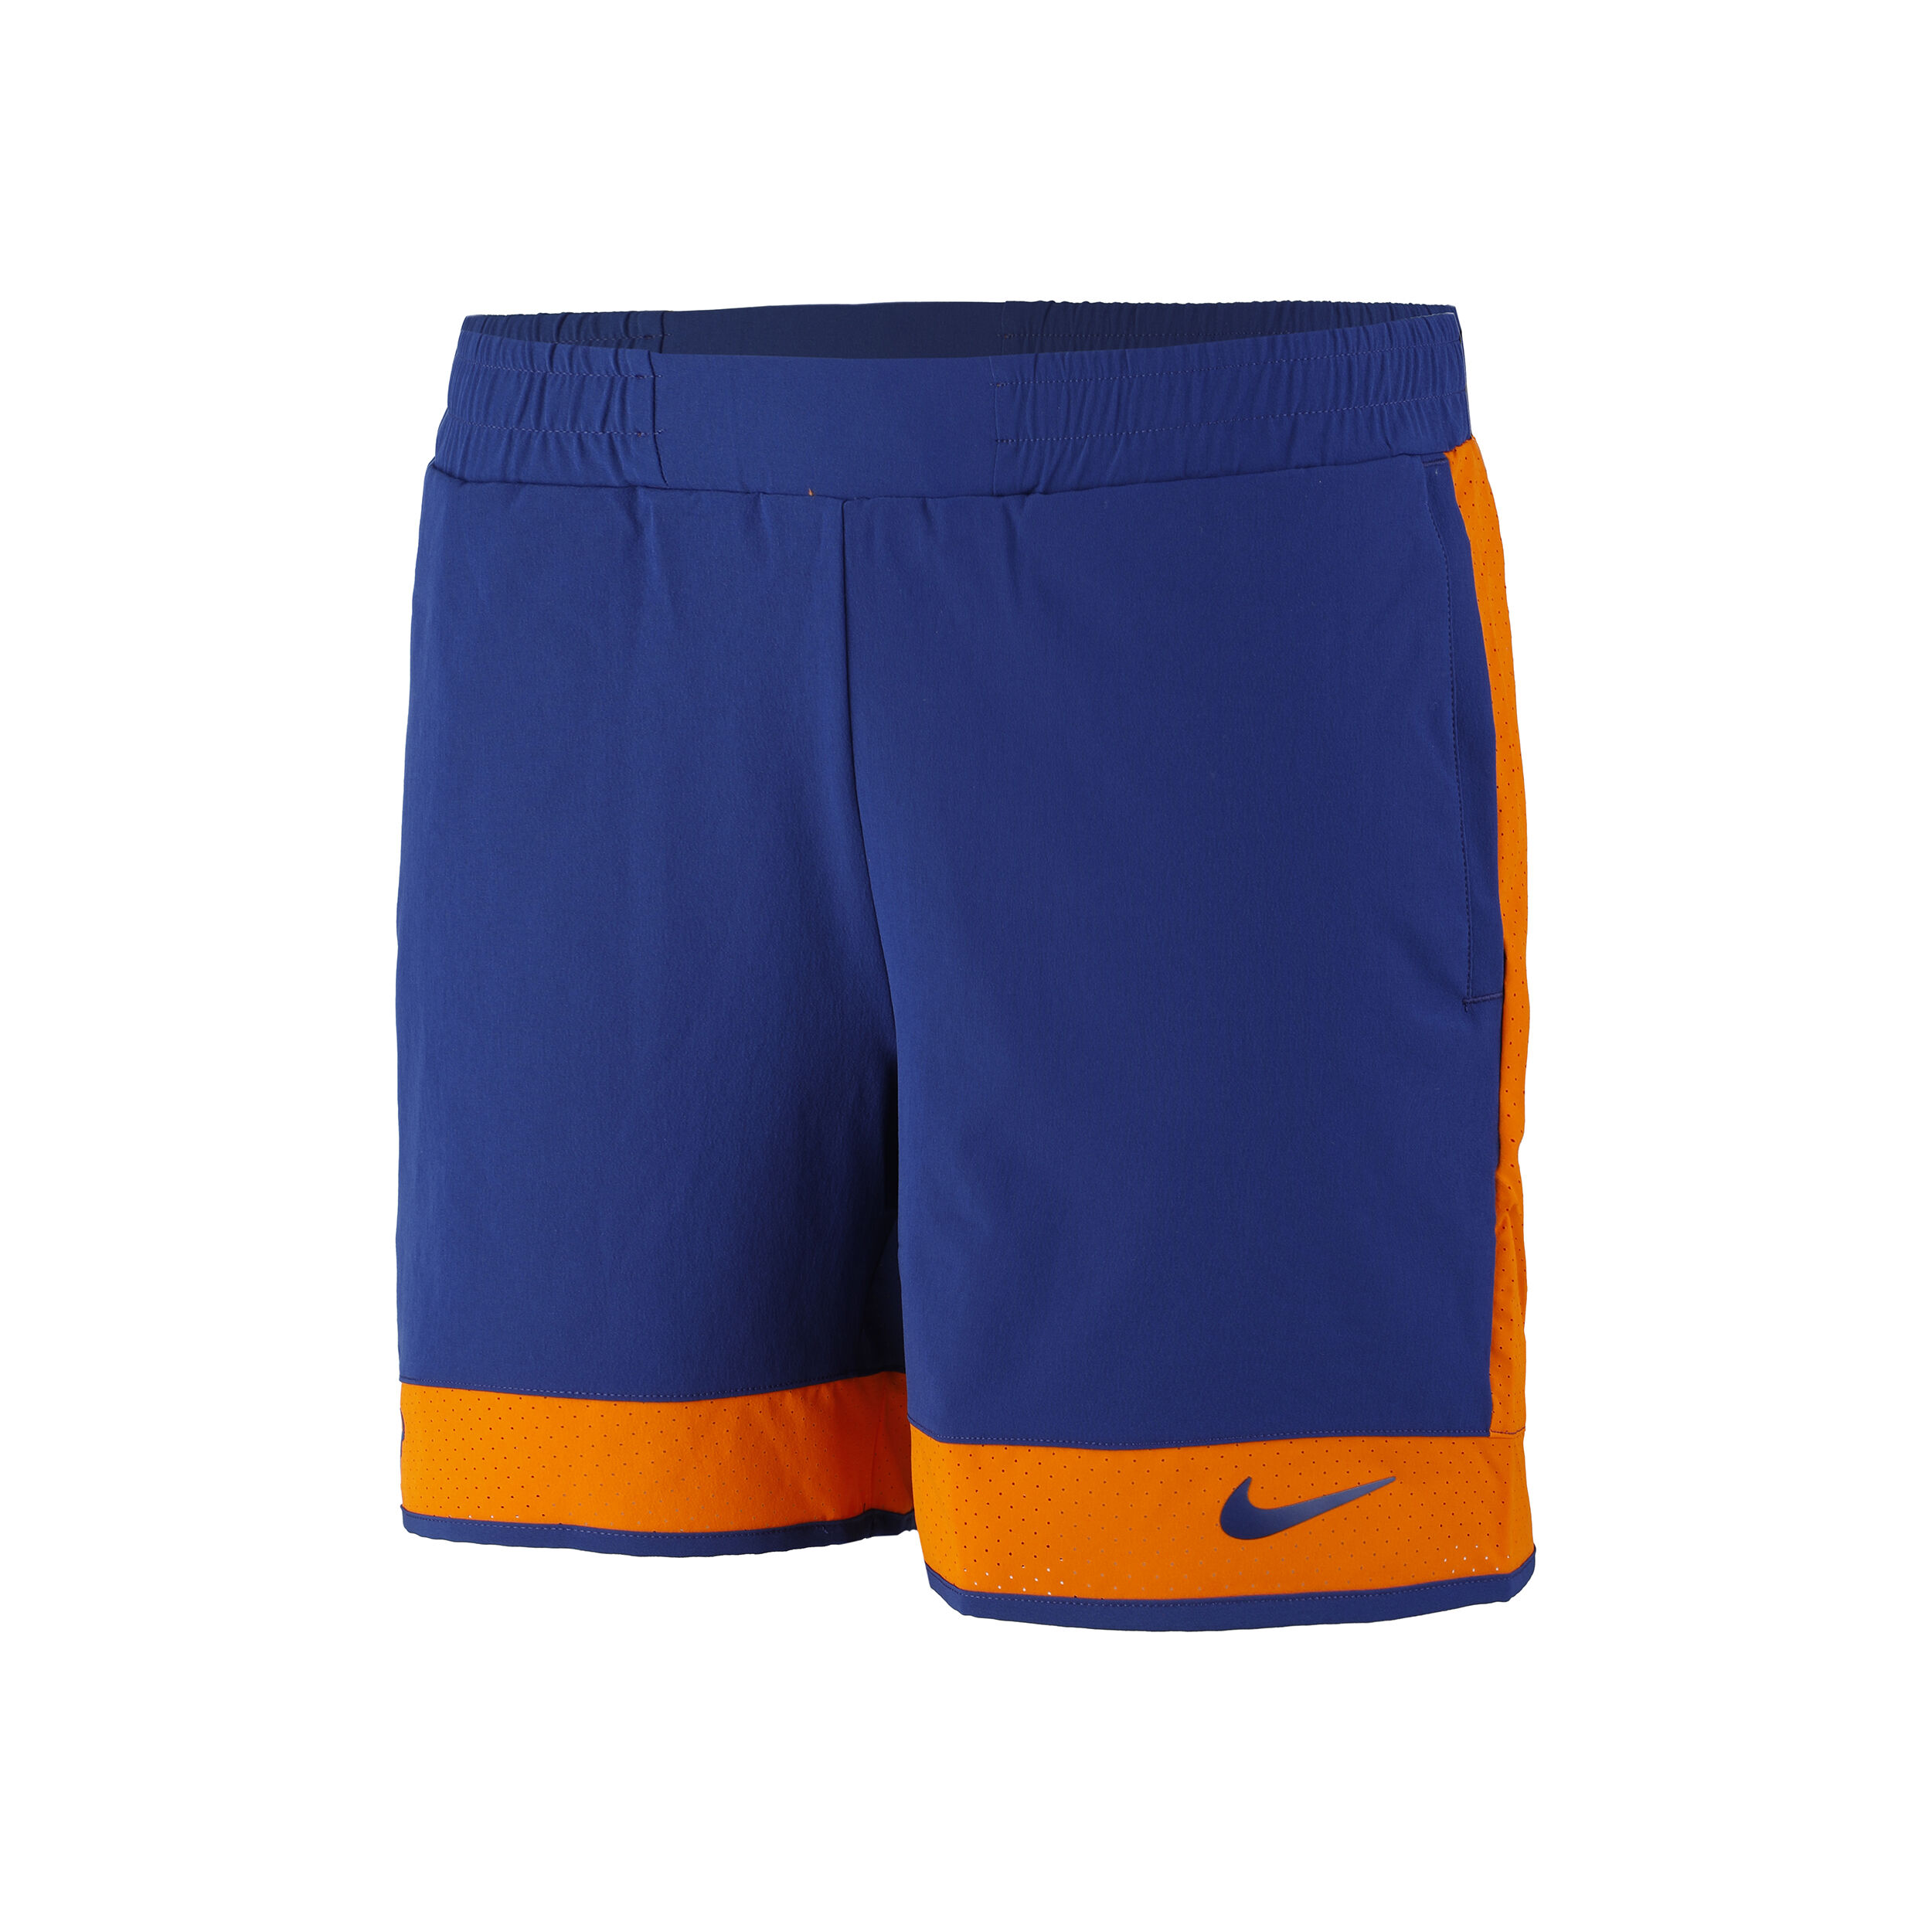 Rafael Nadal Advantage Dri-Fit 7in Shorts Men - Dark Blue, Orange